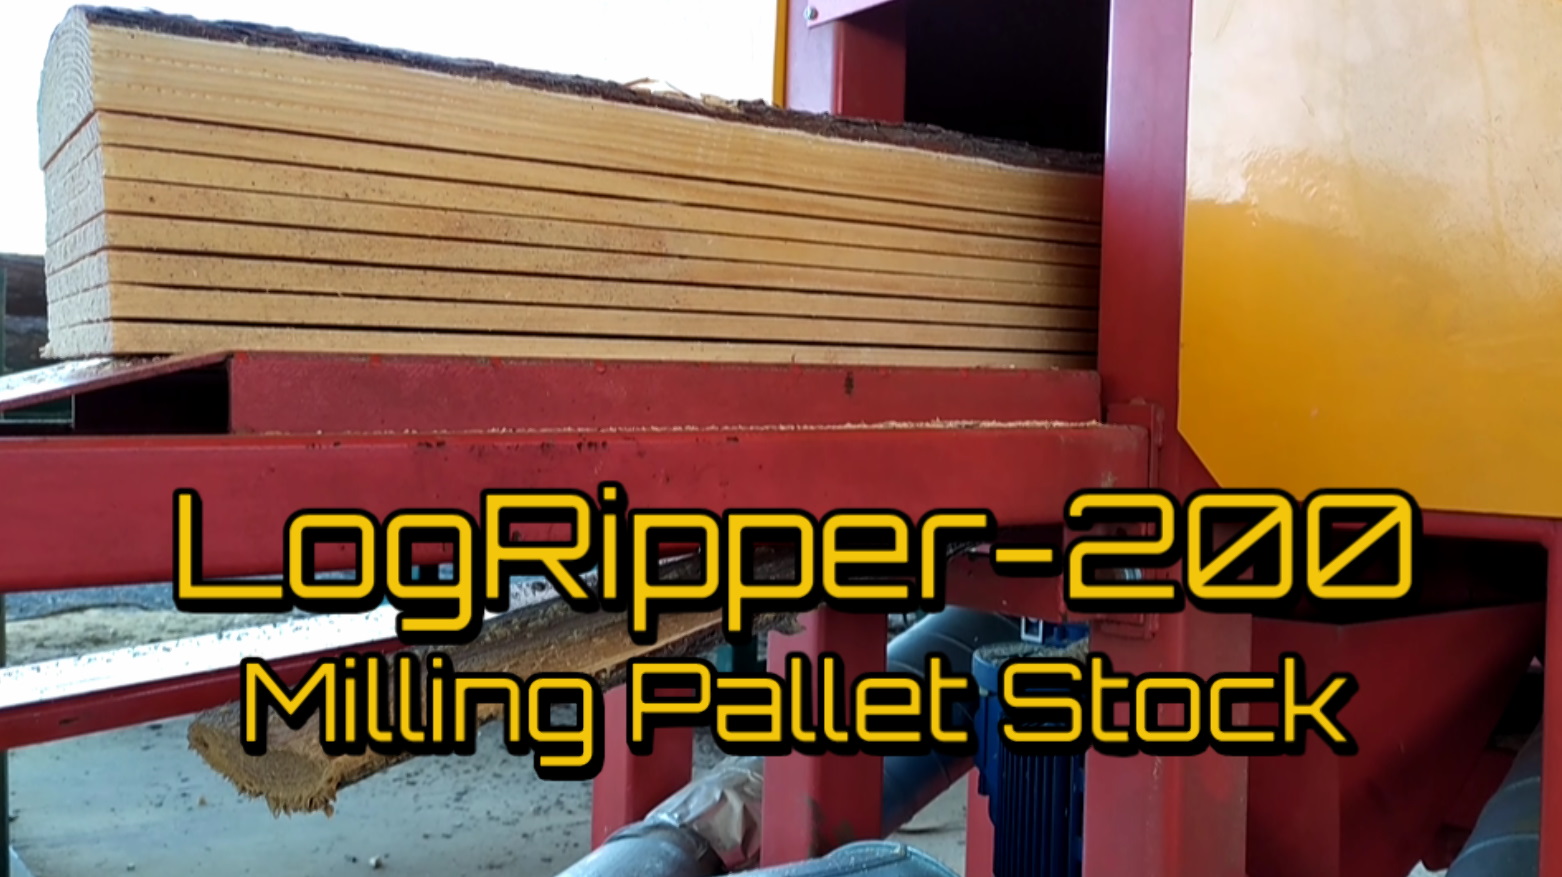 LogRipper-200 Milling Pallet Stock